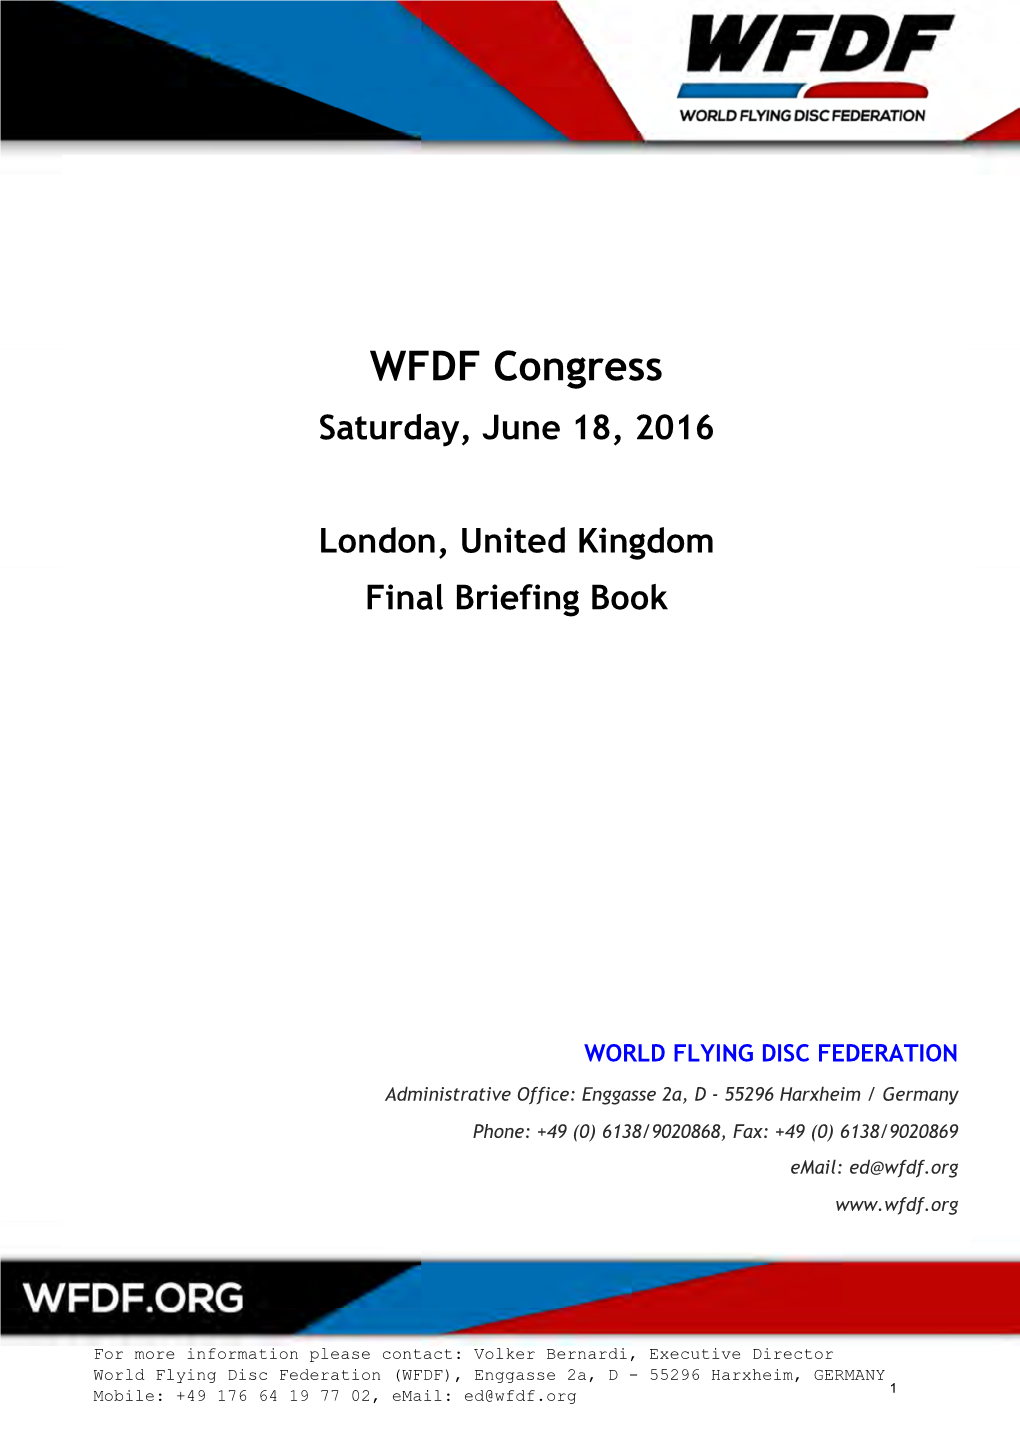 WFDF 2016 Congress Briefing Book Title